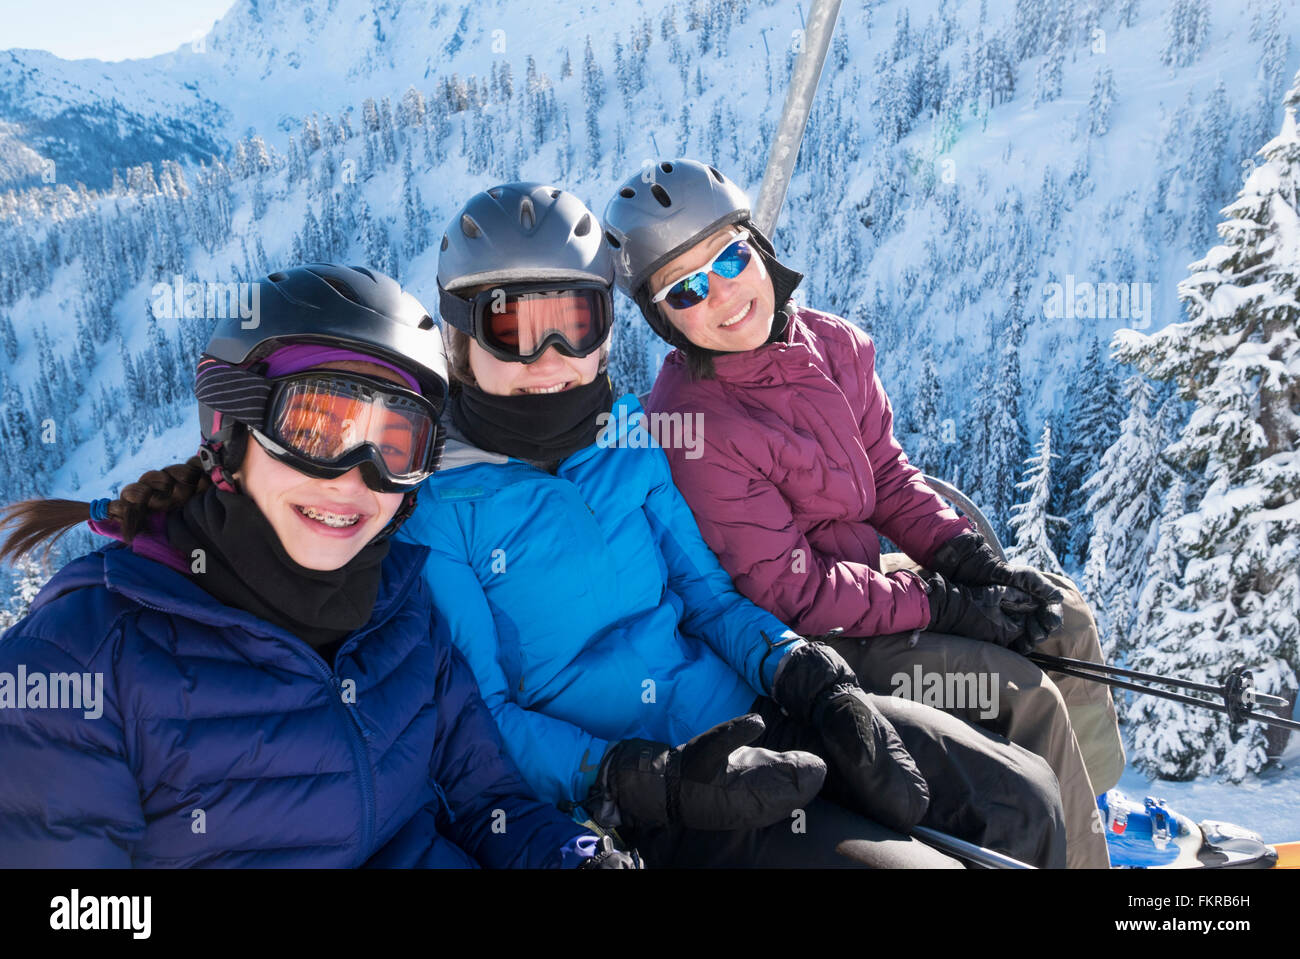 Madre y sus hijas caballo ski lift Foto de stock